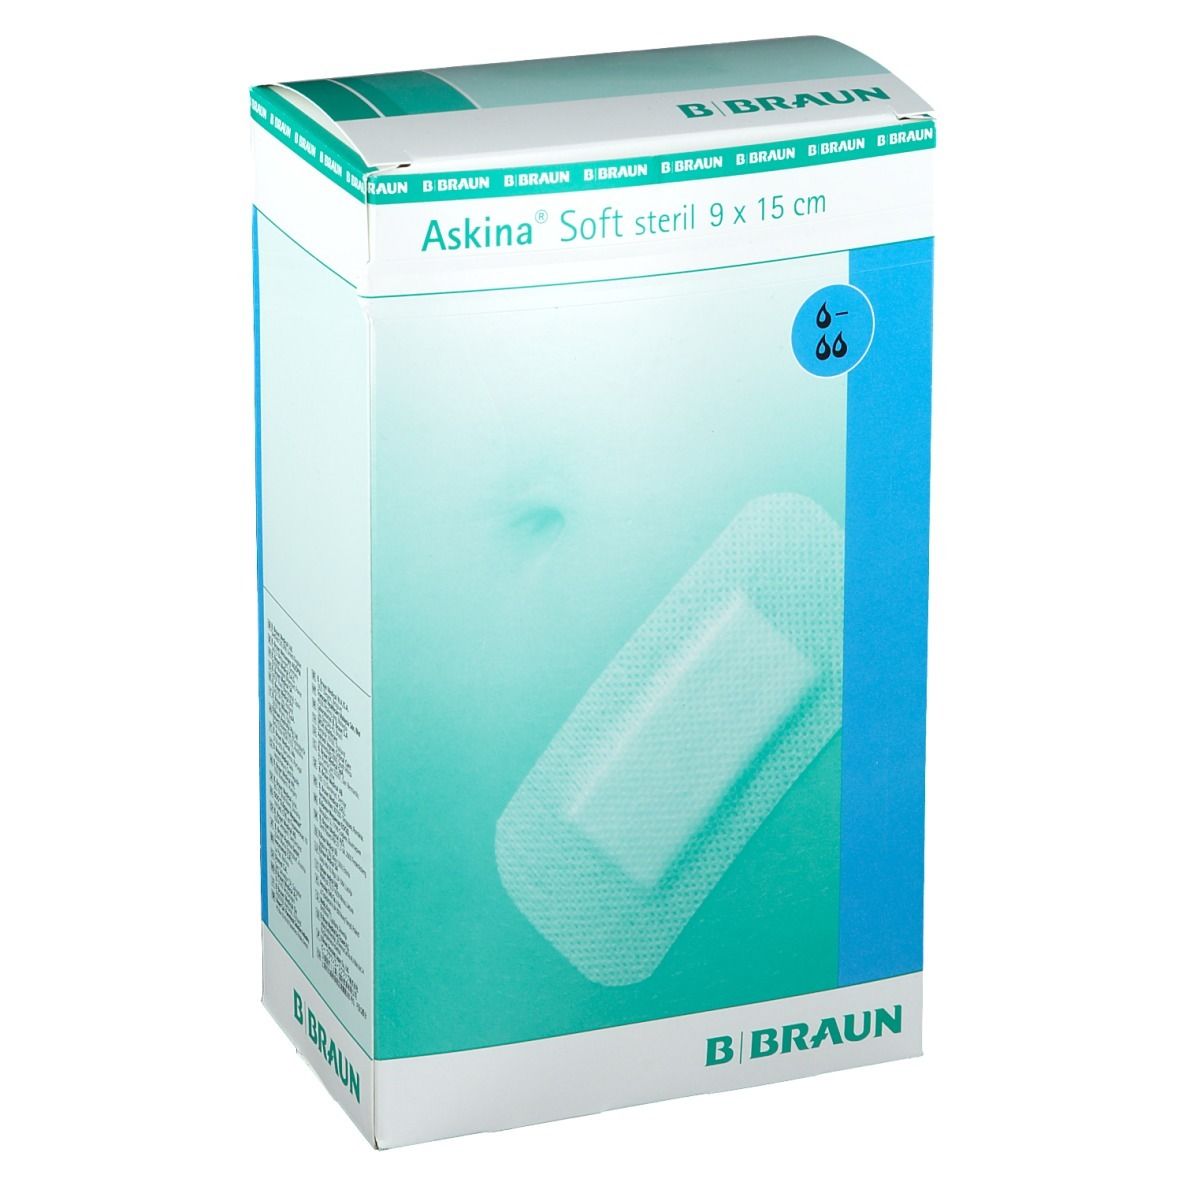 Askina® Soft Wundverband 9 x 15 cm sterile